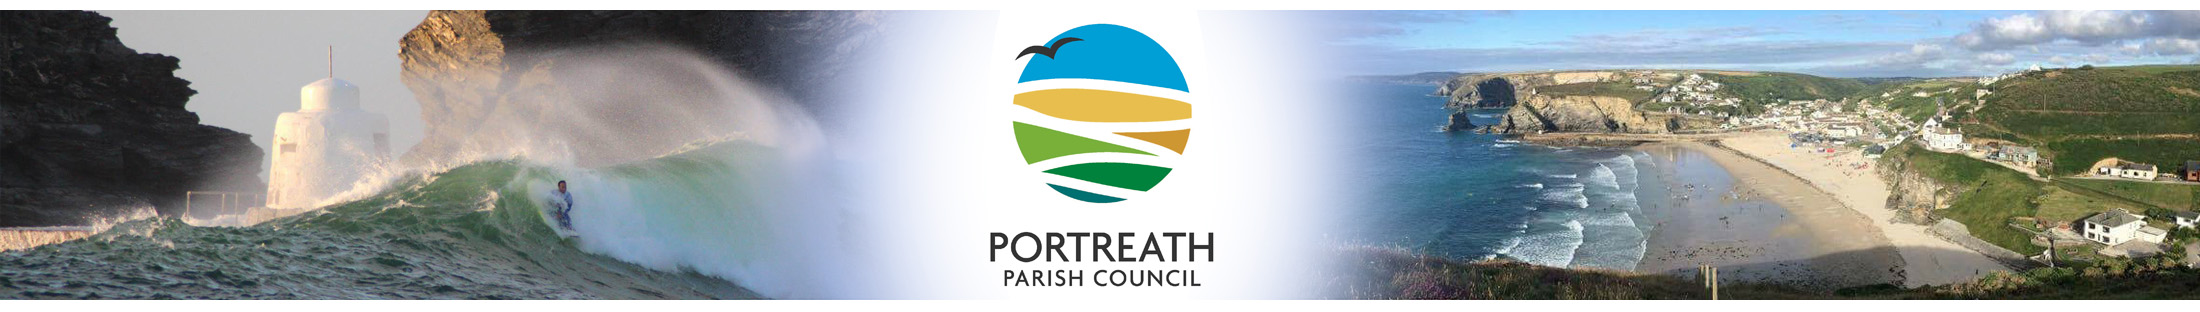 Header Image for Portreath Parish Council